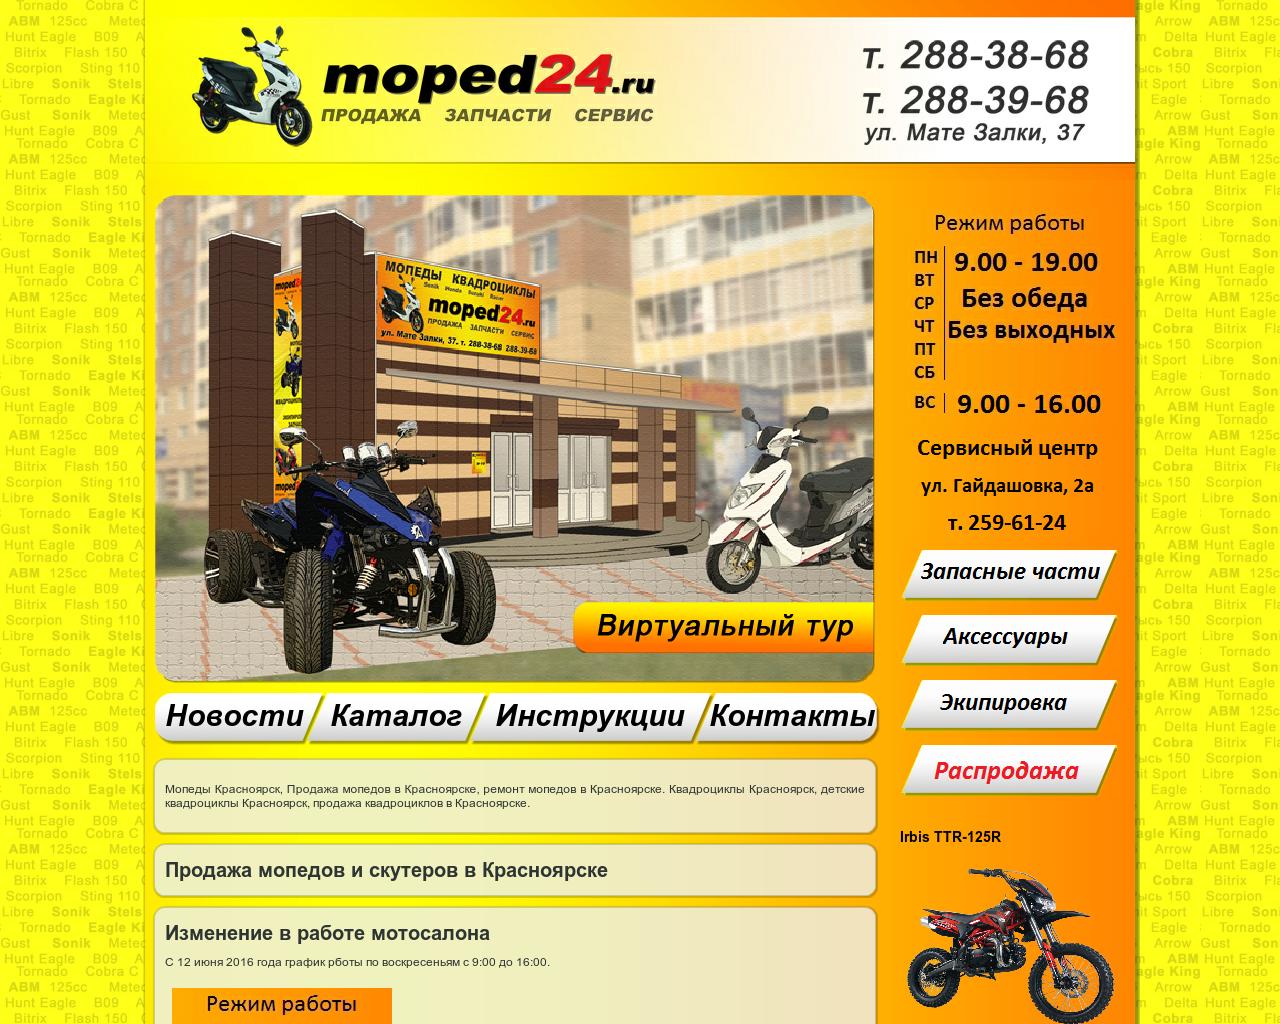 Изображение сайта moped24.ru в разрешении 1280x1024